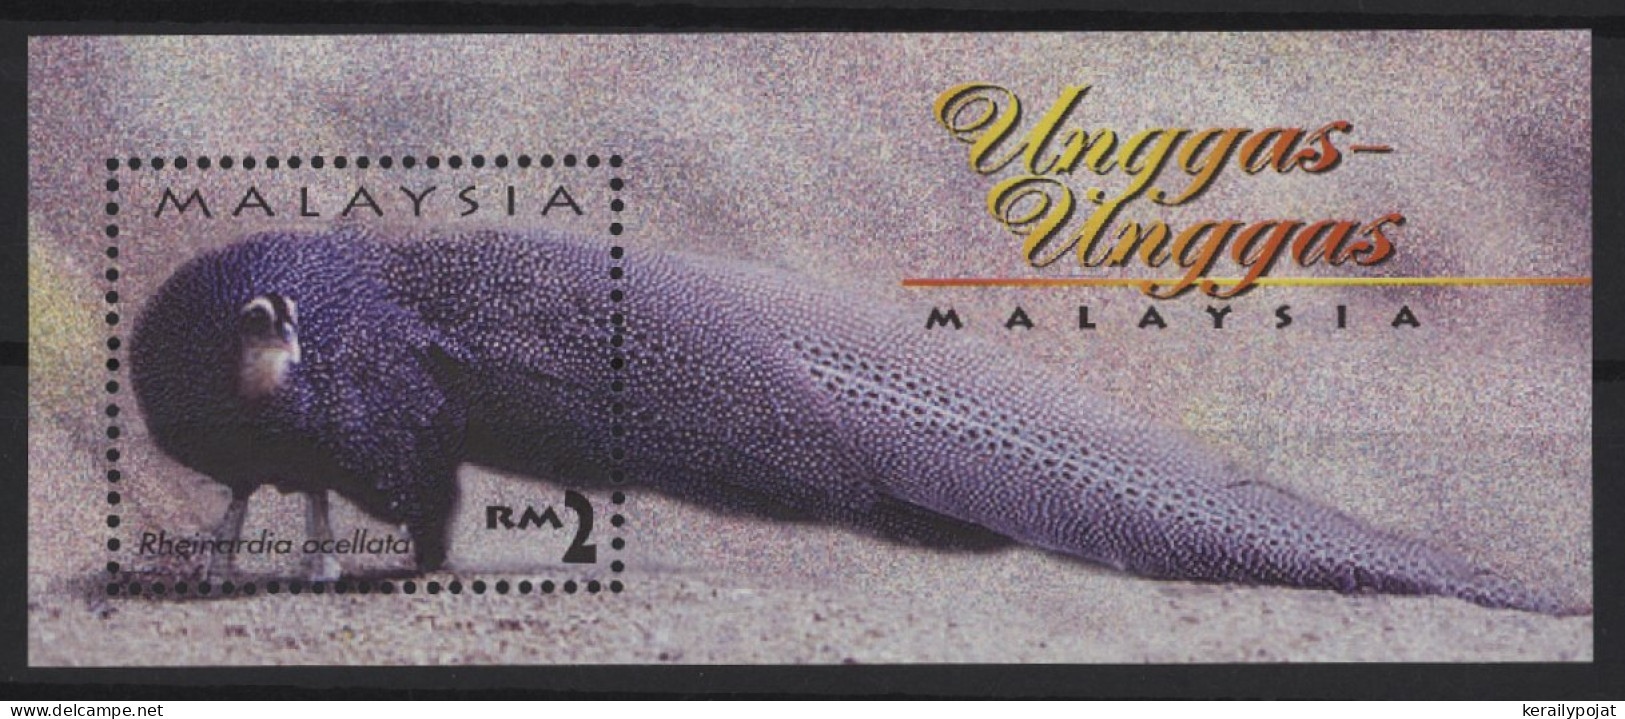 Malaysia - 2000 Native Birds Block MNH__(TH-27247) - Malaysia (1964-...)